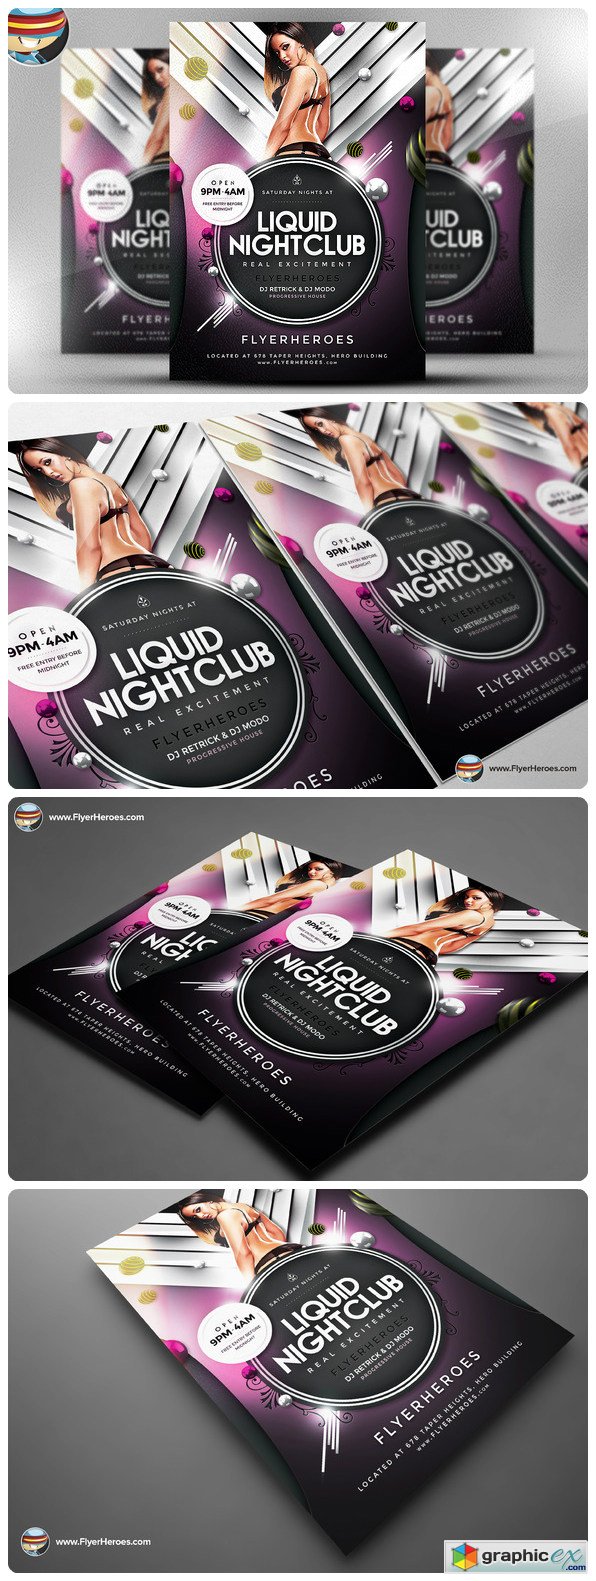  Liquid Nightclub Flyer